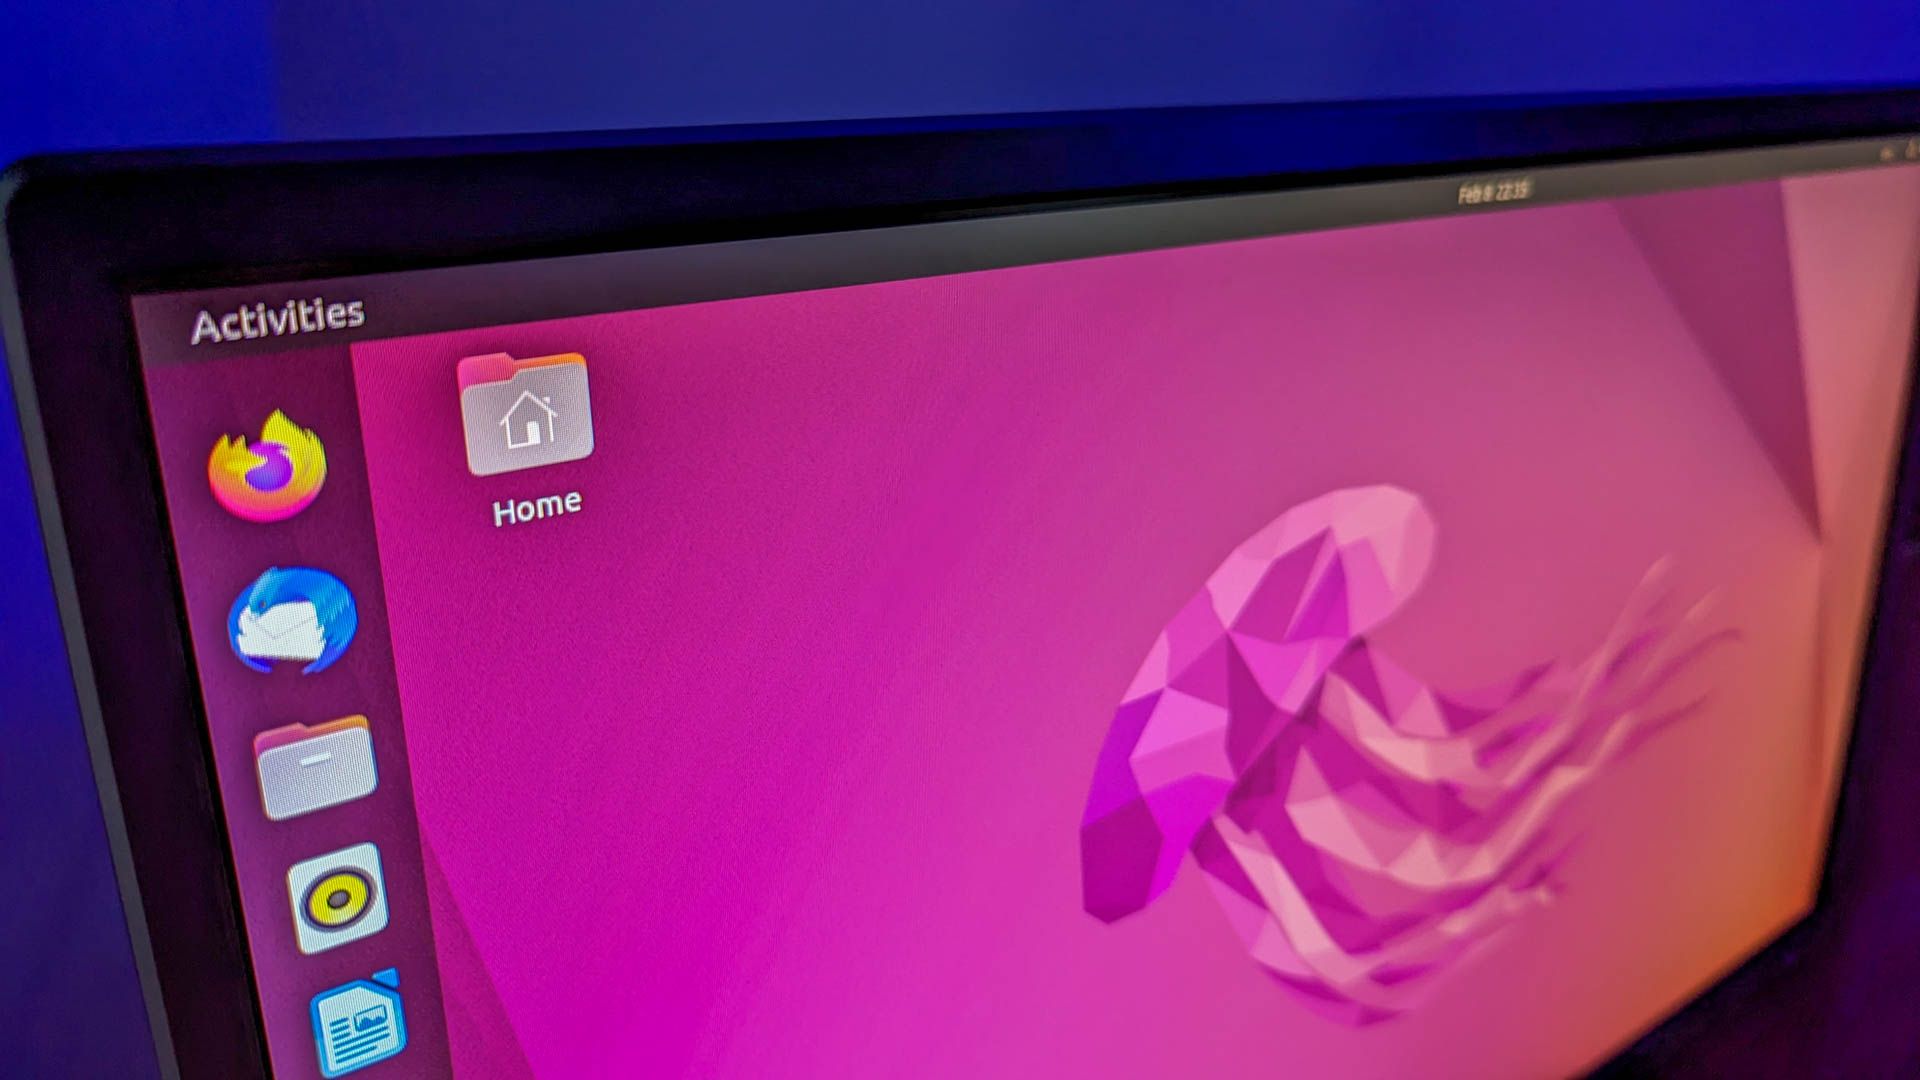 An Ubuntu desktop with a directory shown